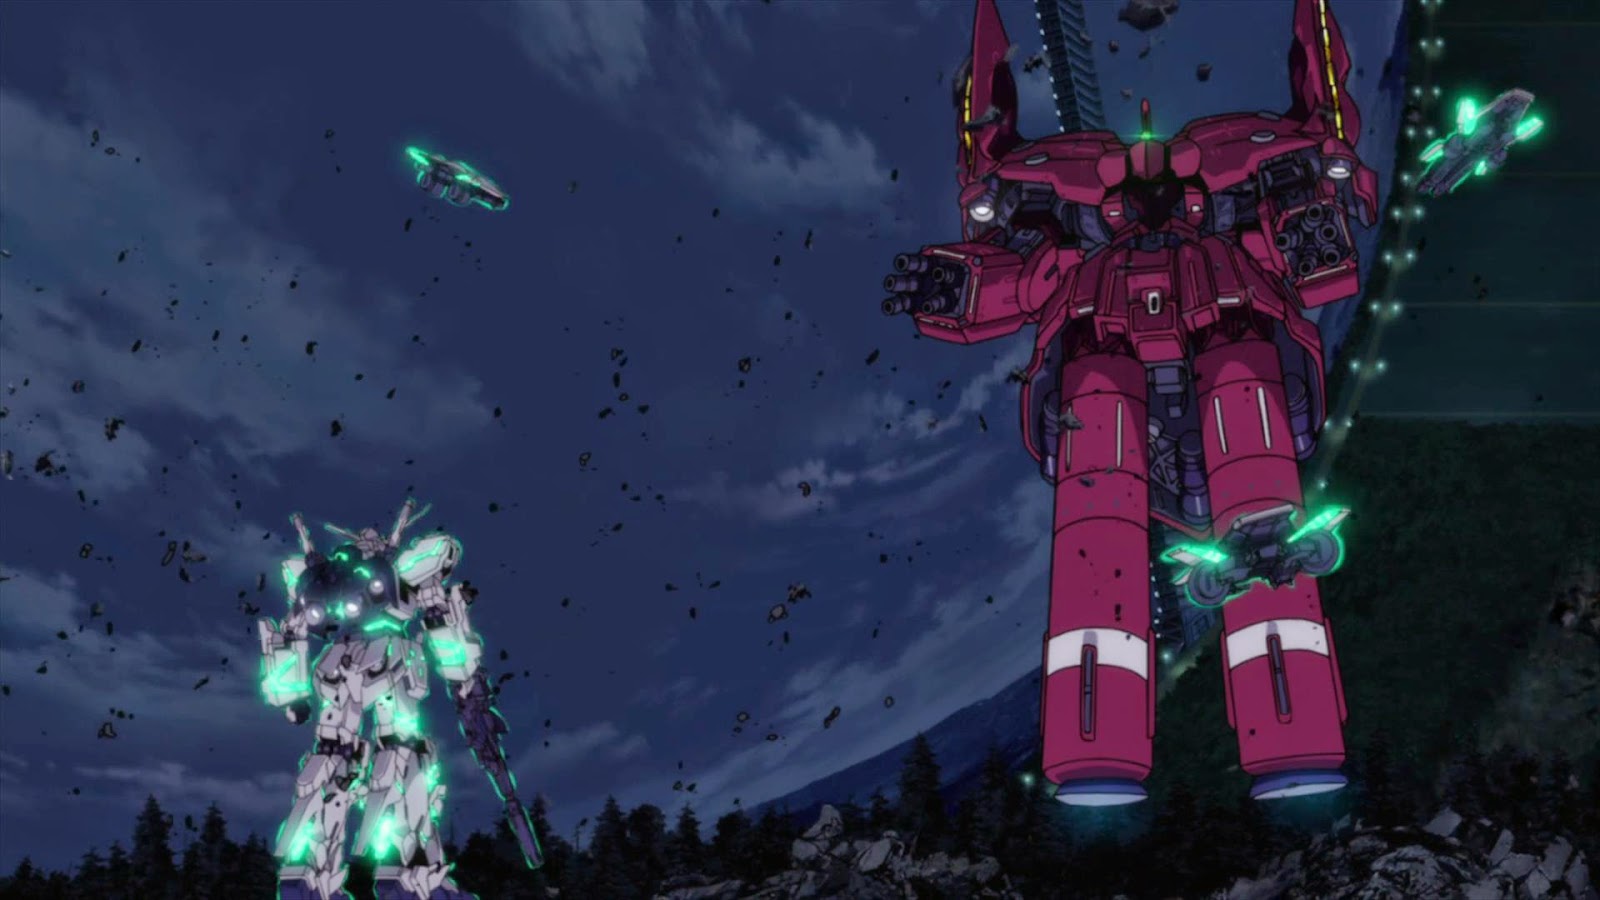 Shinkan Crossing The End Of Mobile Suit Gundam Unicorn